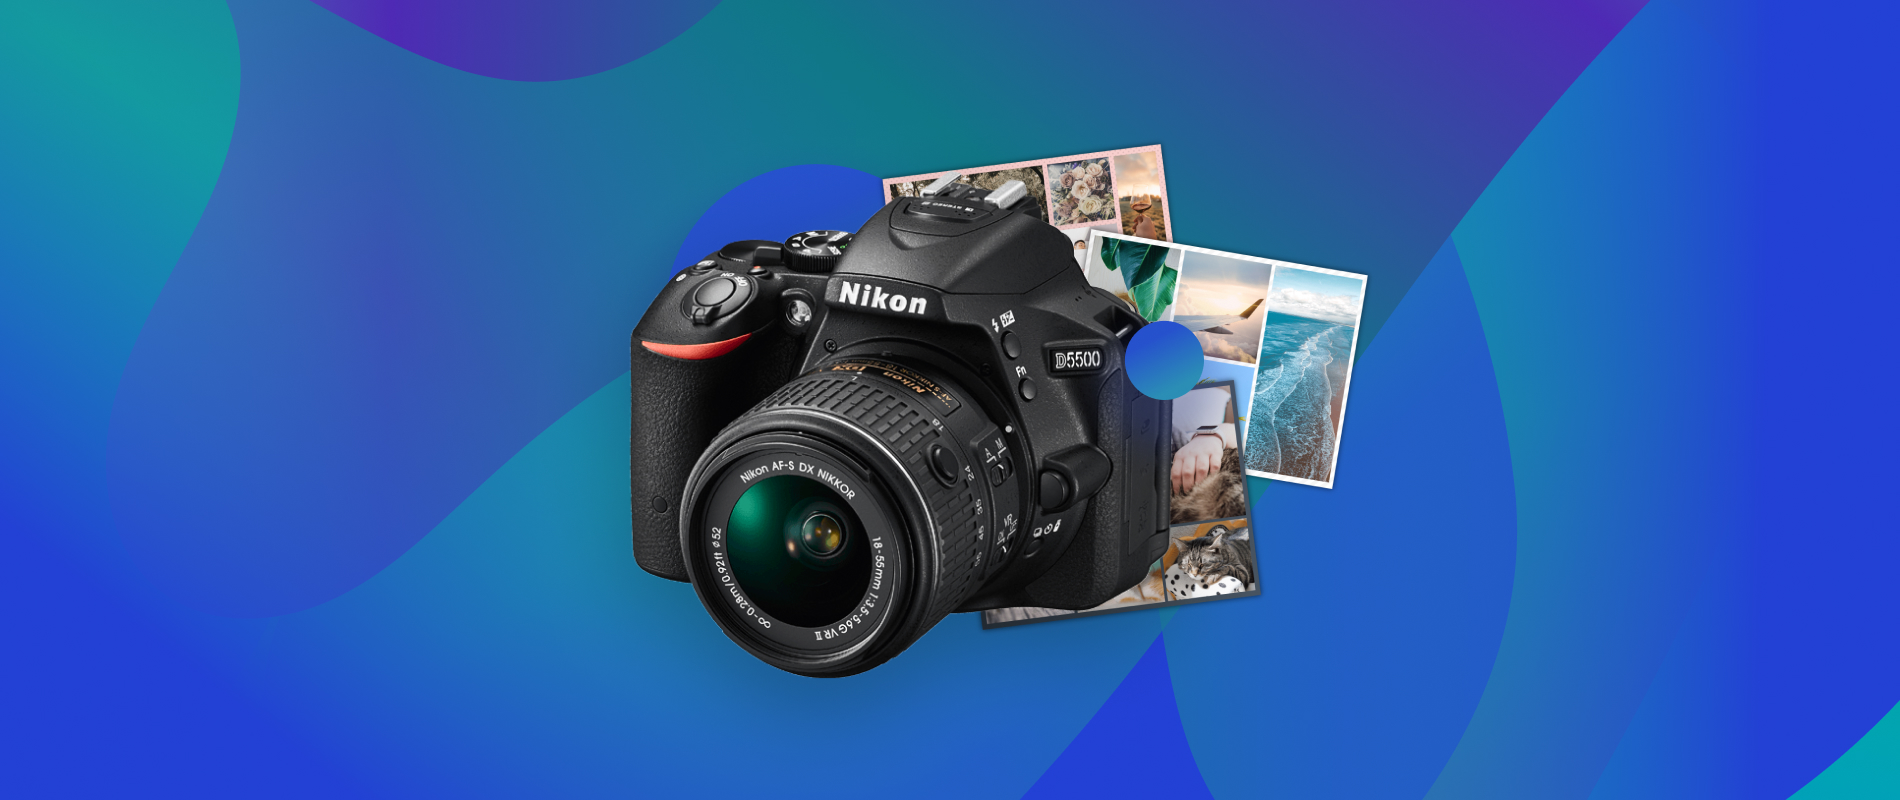 How to Download Nikon D3500 Photos & Videos to a Computer